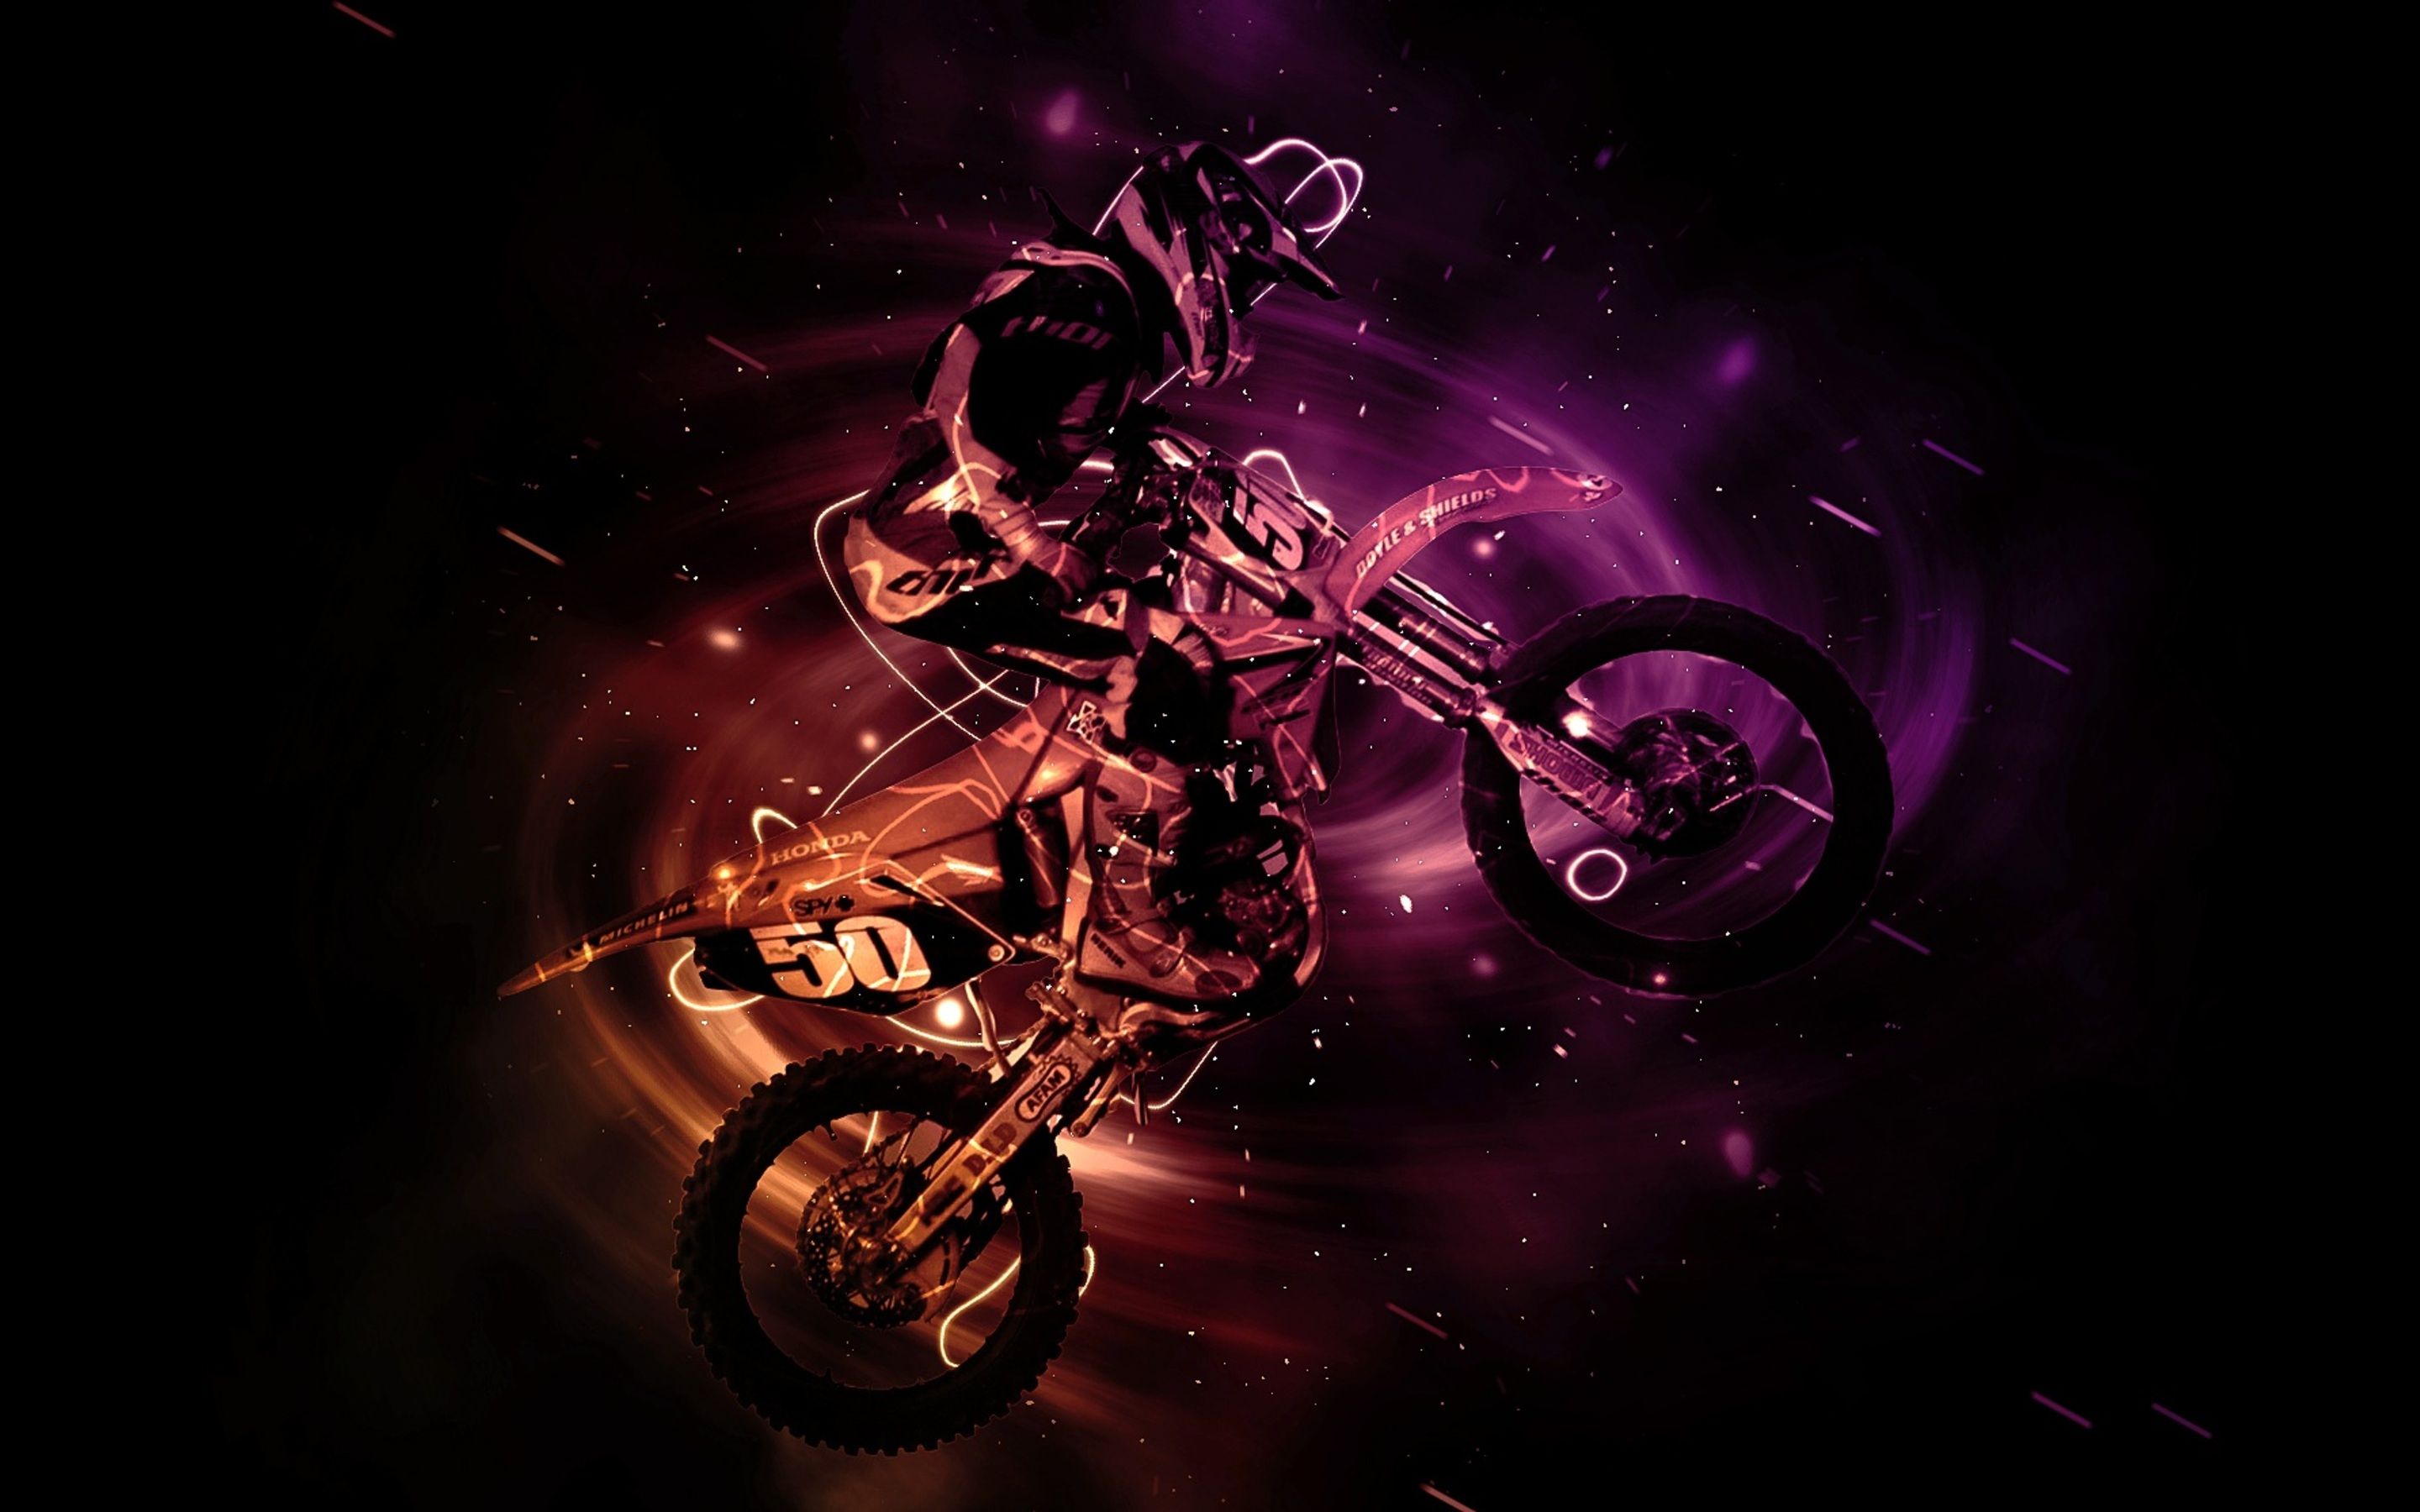 Motocross Bike Artistic Macbook Pro Retina HD 4k Wallpaper, Image, Background, Photo and Picture